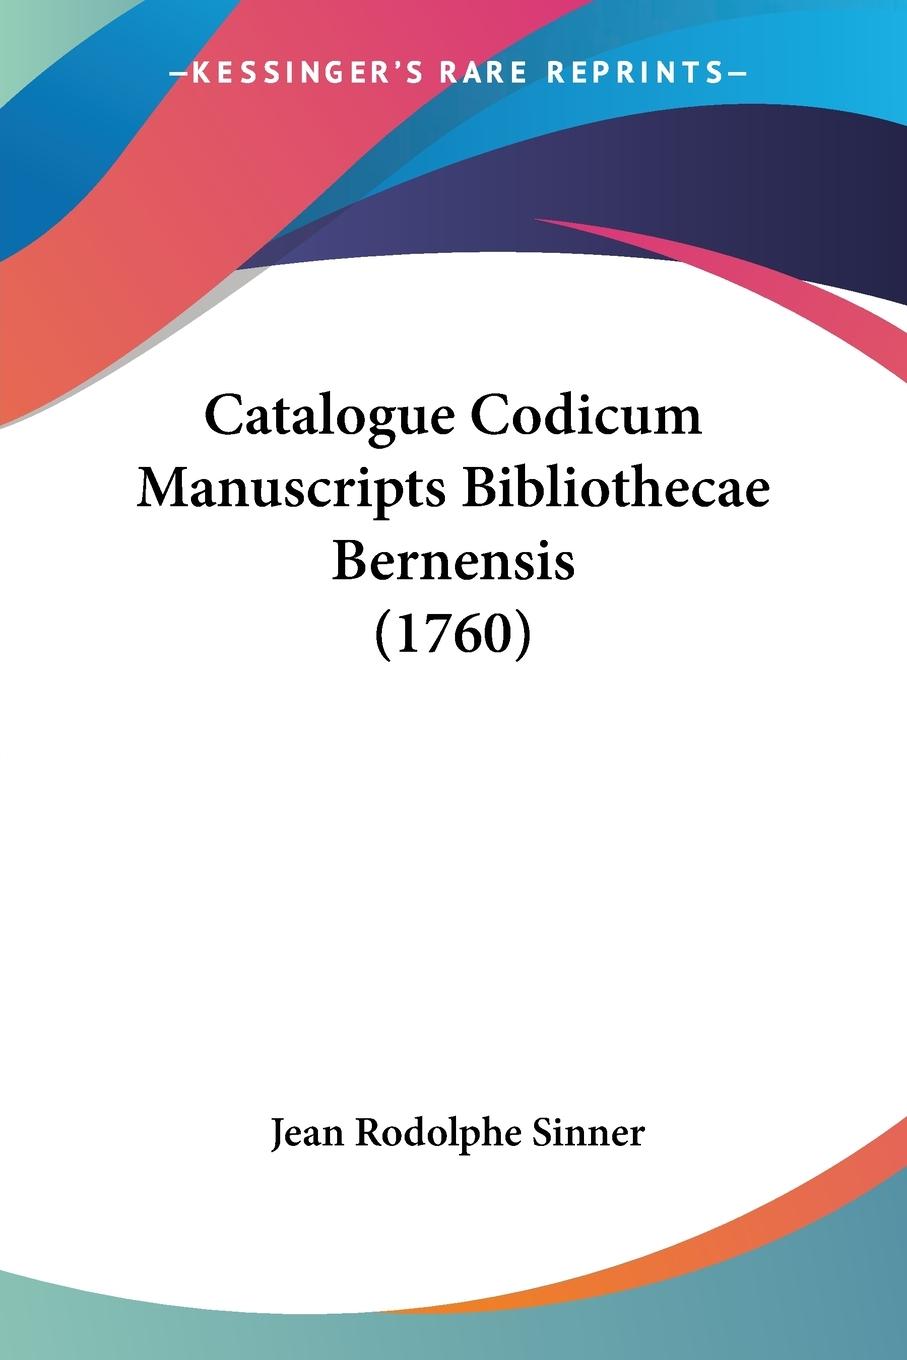 Catalogue Codicum Manuscripts Bibliothecae Bernensis (1760) - Sinner, Jean Rodolphe